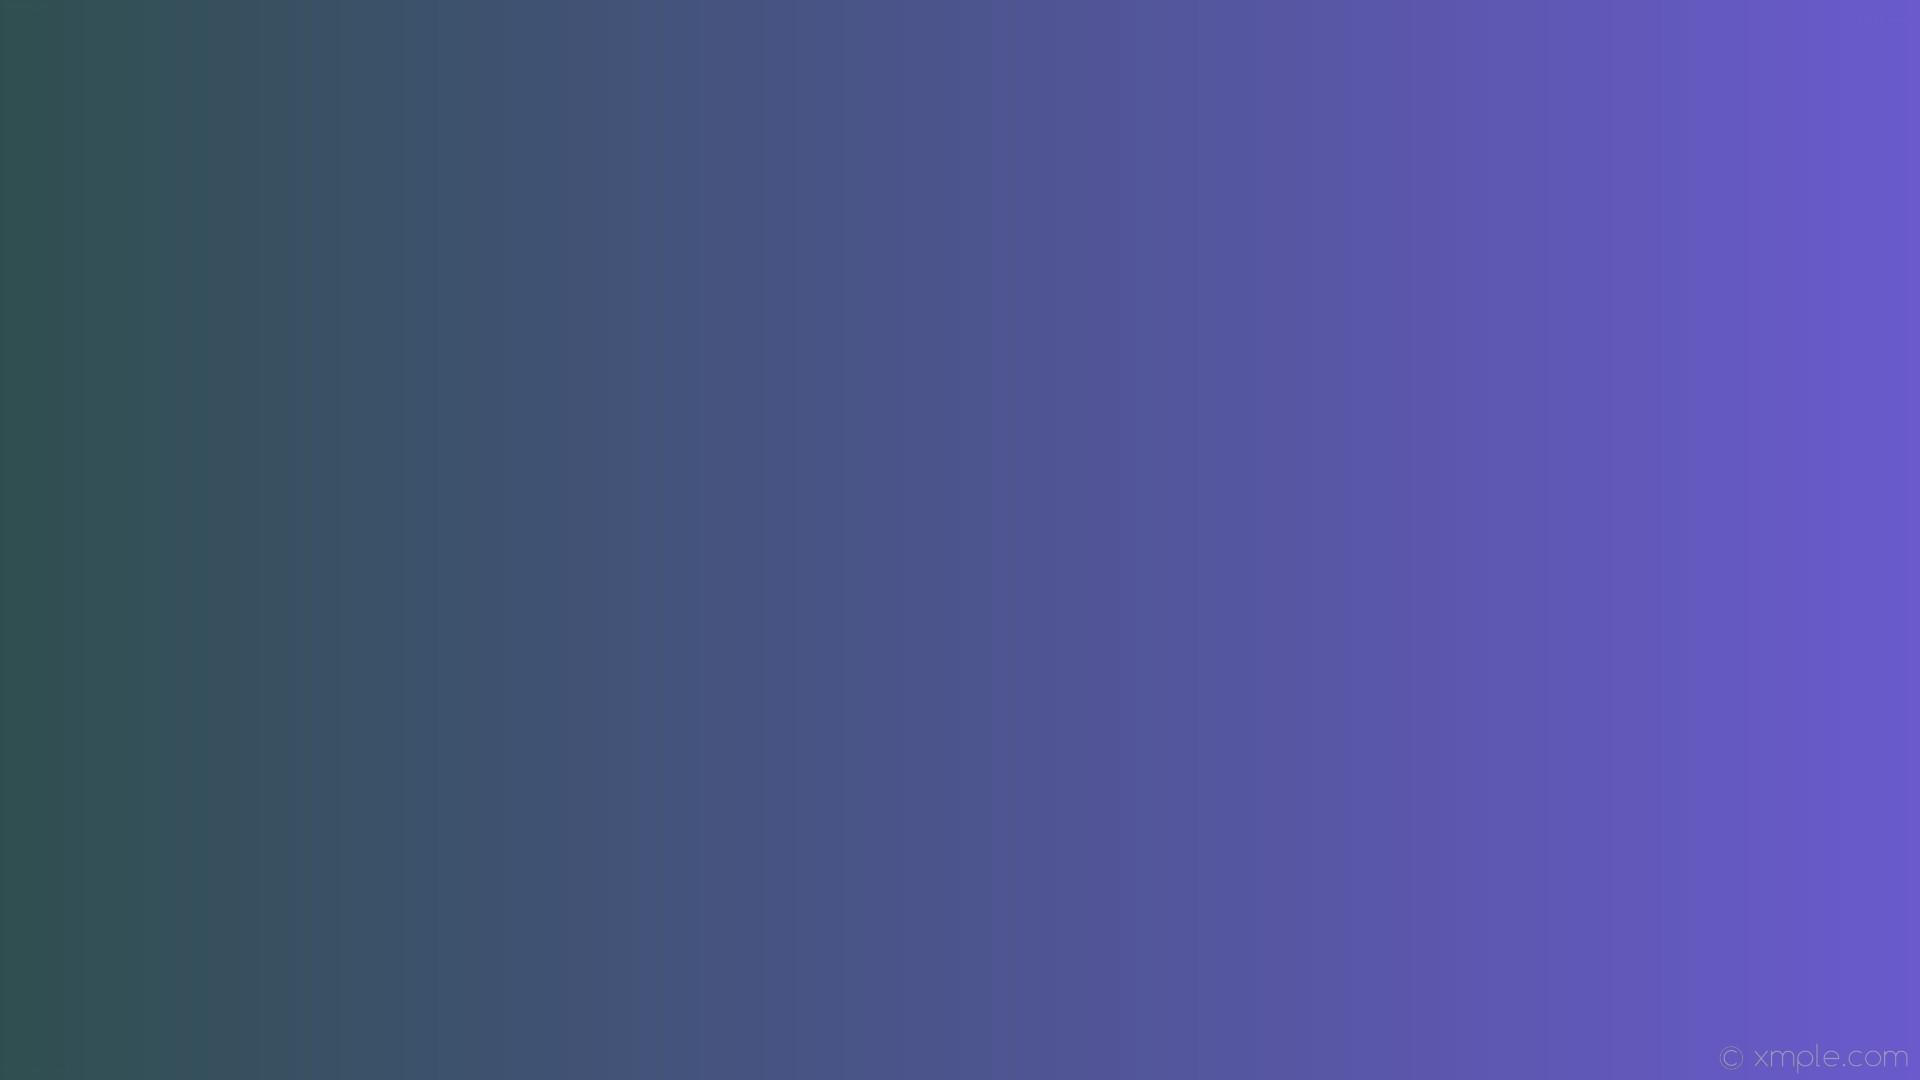 1920x1080 wallpaper gradient purple grey linear slate blue dark slate gray #6a5acd  #2f4f4f 0Â°